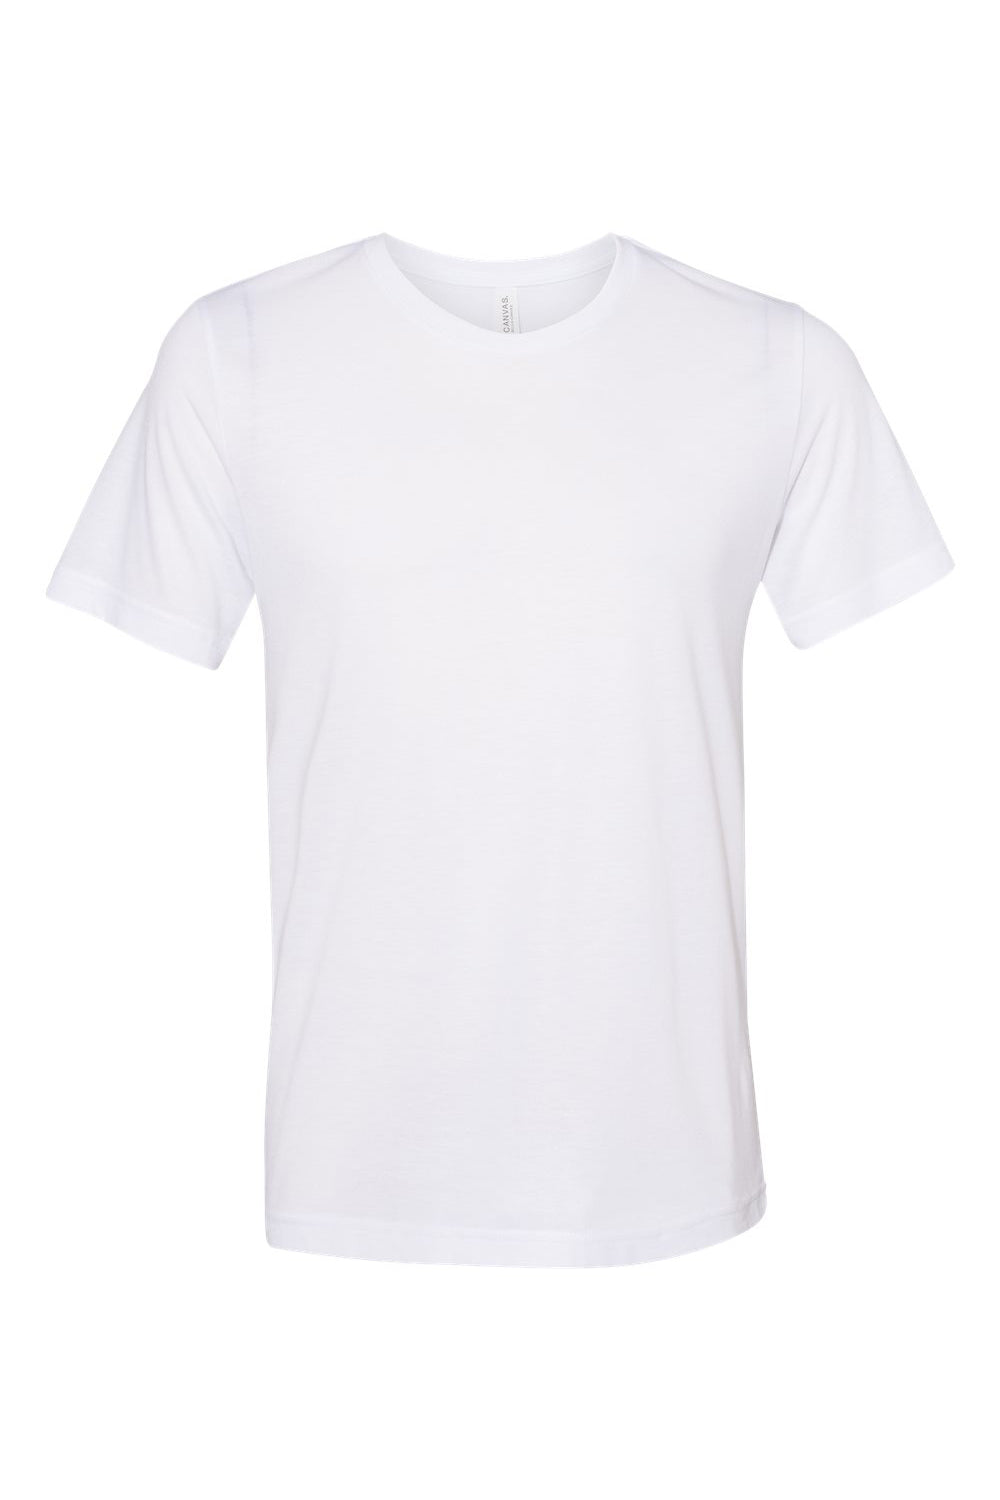 Bella + Canvas 3880C/3880 Mens Short Sleeve Crewneck T-Shirt White Flat Front